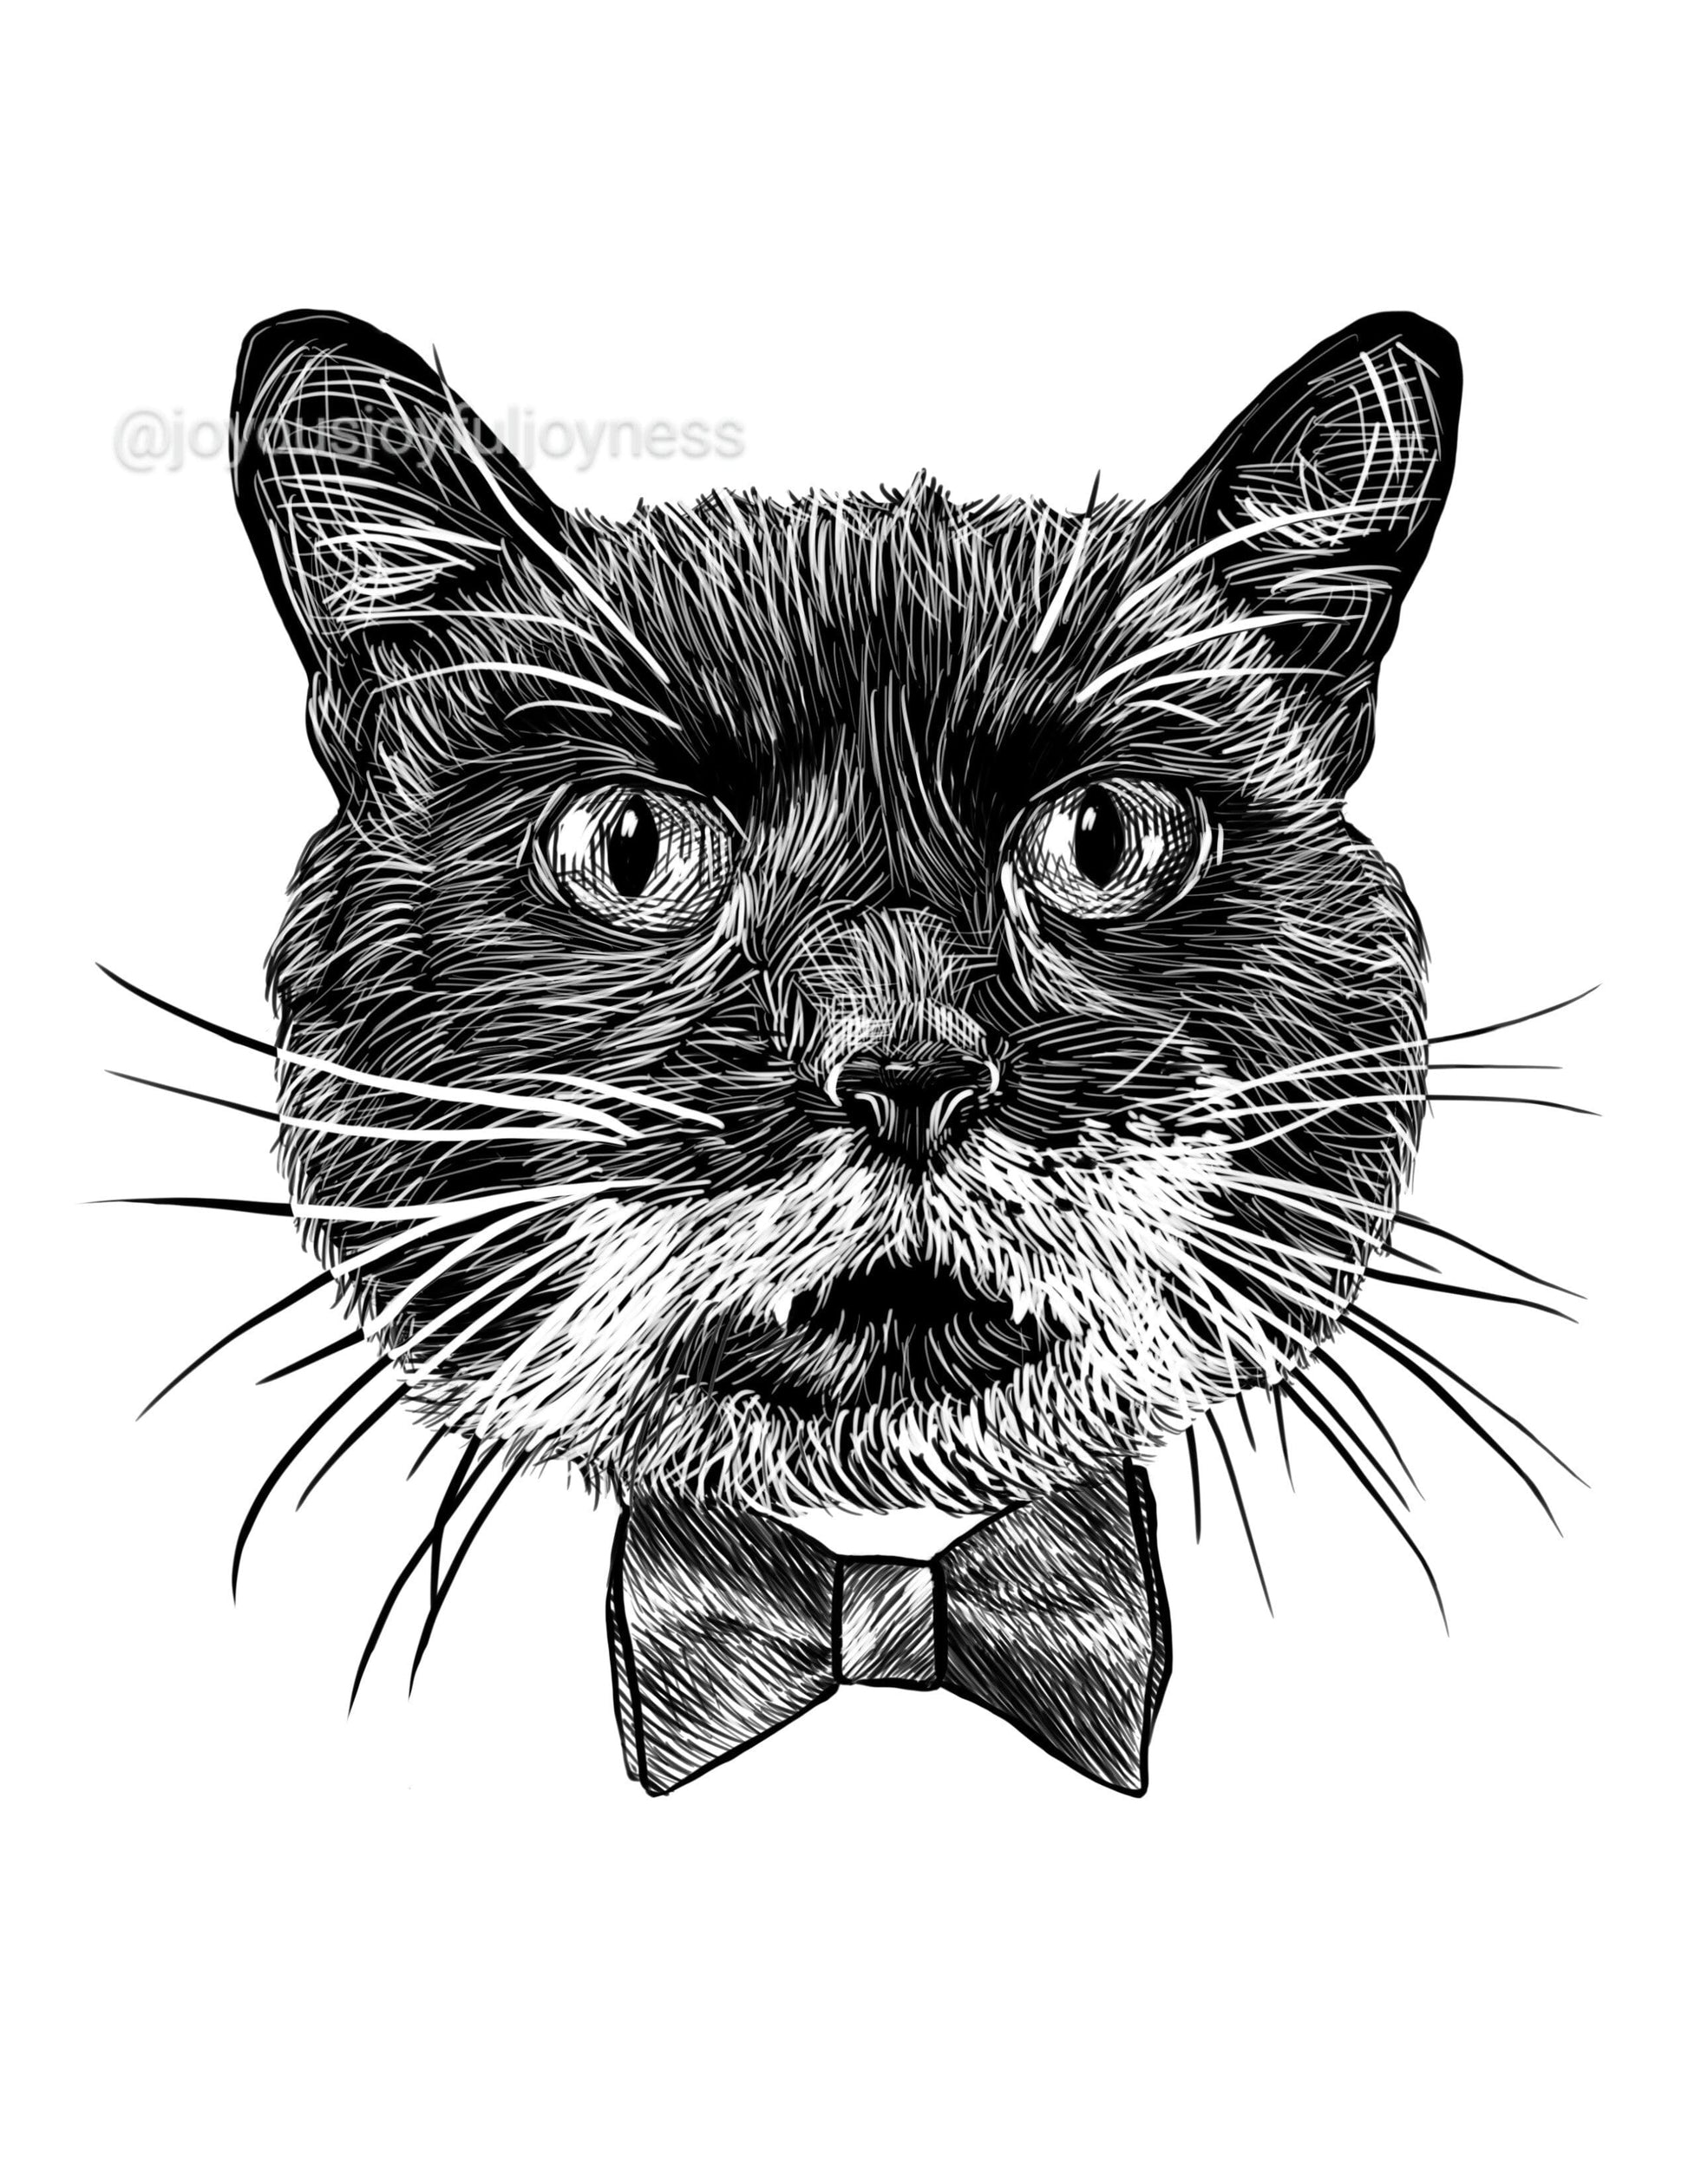 Portfolio: Jagers T. Cat (Not for sale) Posters, Prints, & Visual Artwork JoyousJoyfulJoyness 